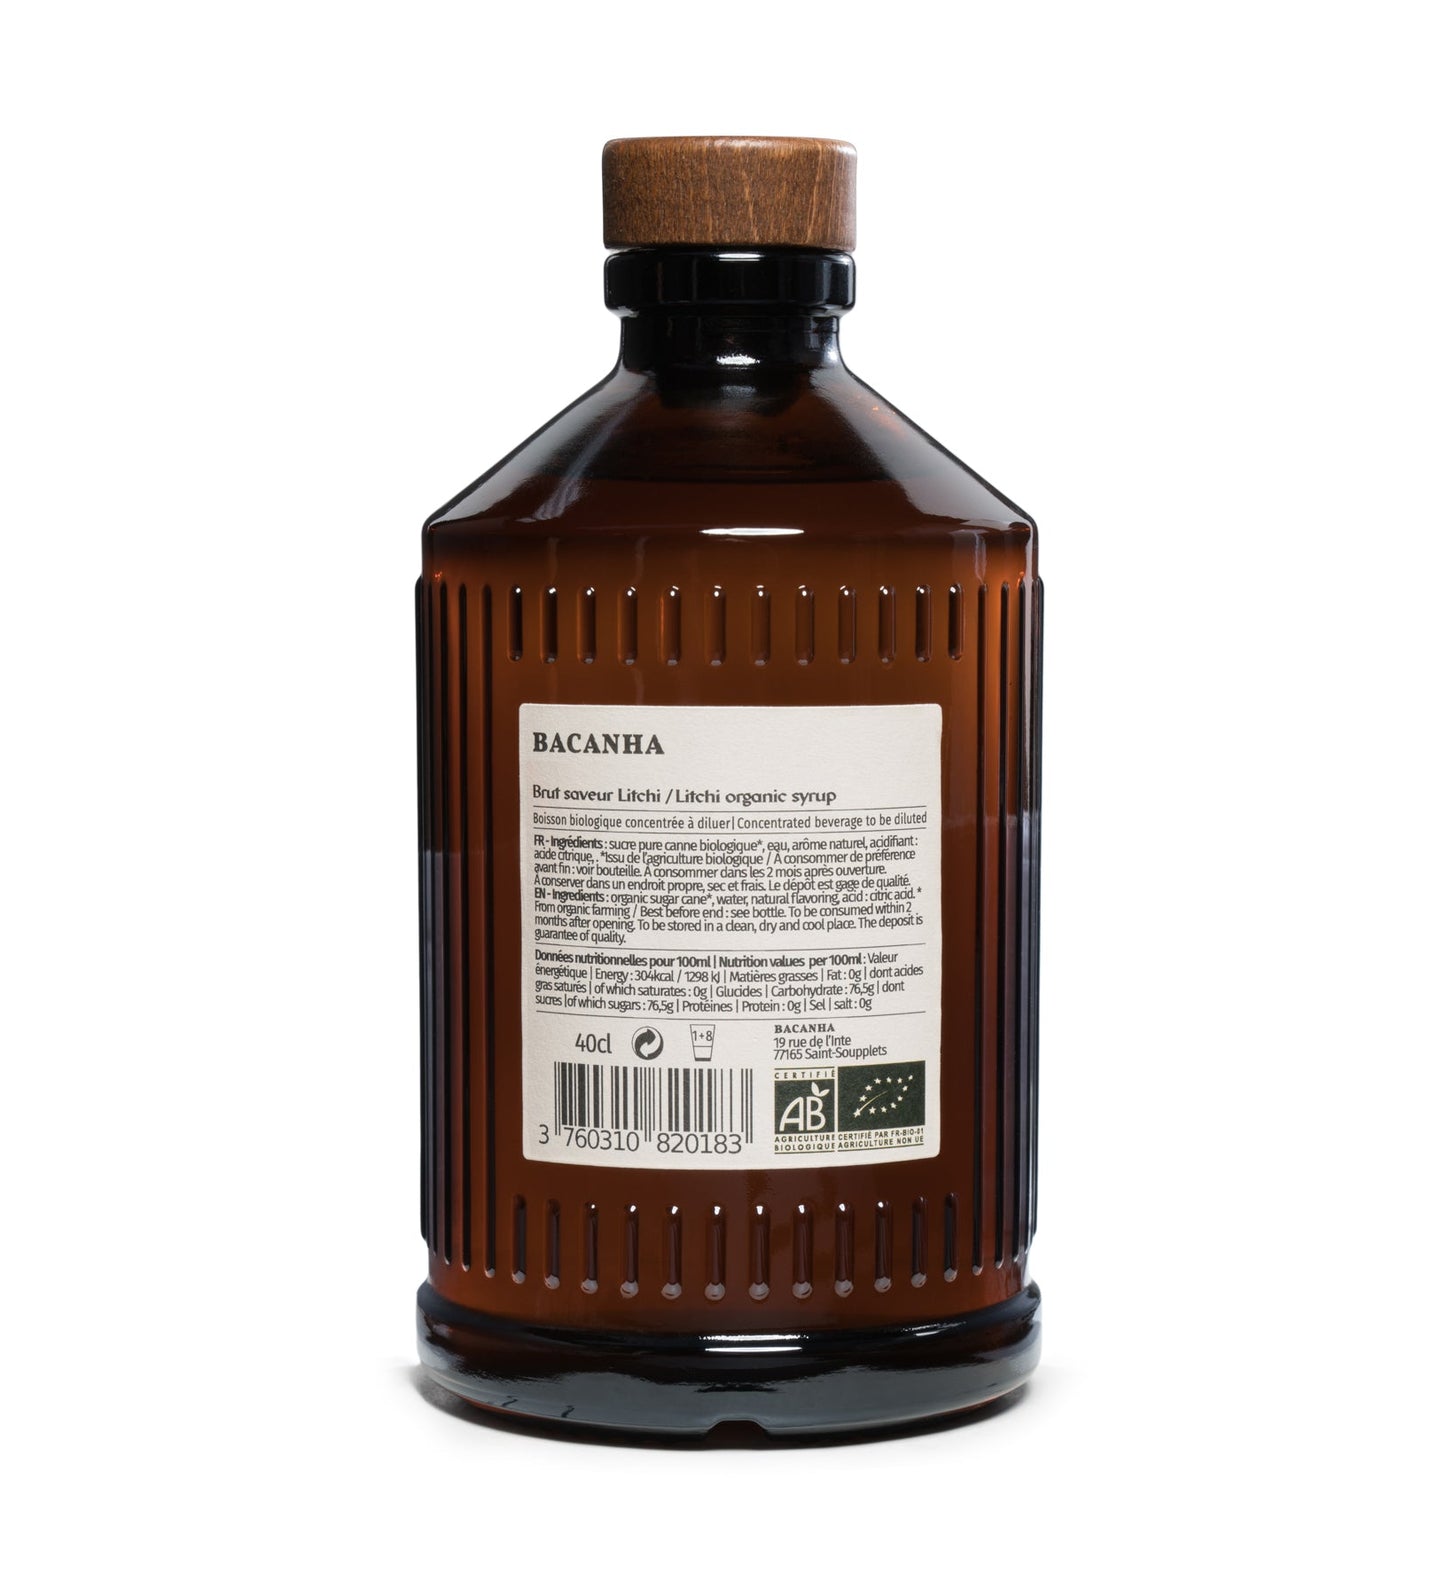 Bacanha Litchi flavored syrup [ORGANIC]